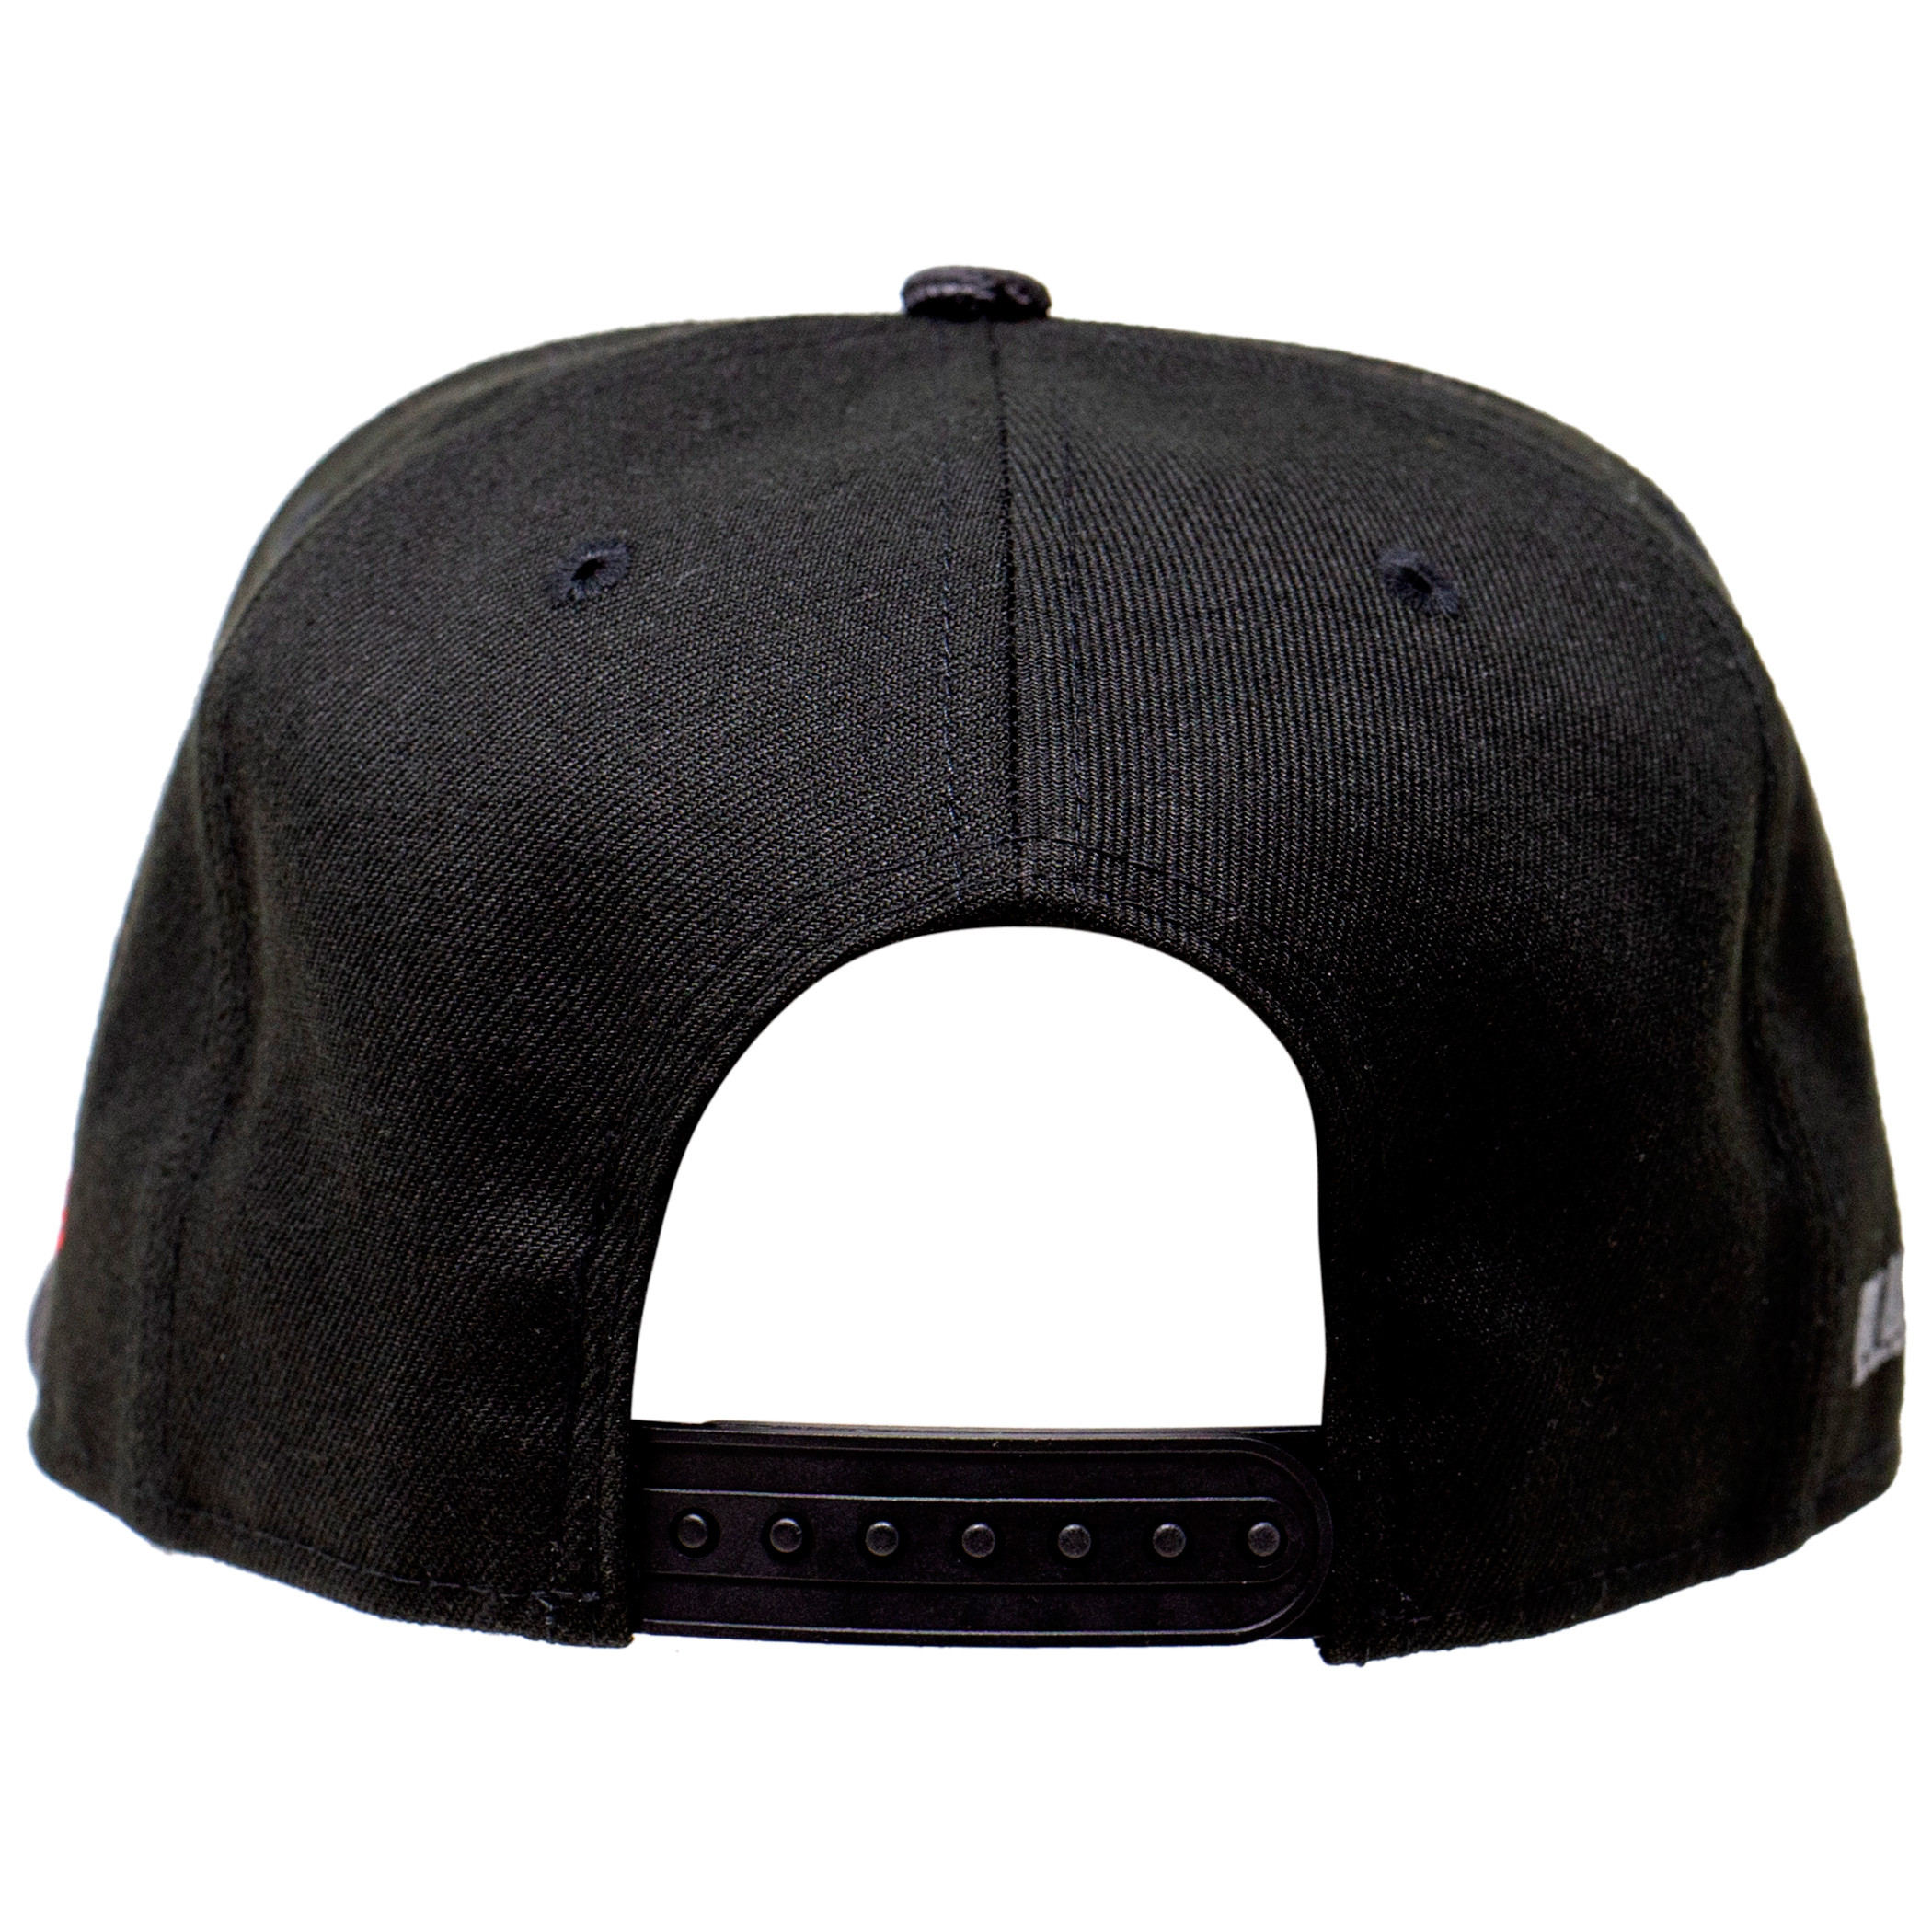 Black Widow Movie Carbon Symbol 9Fifty Adjustable New Era Hat